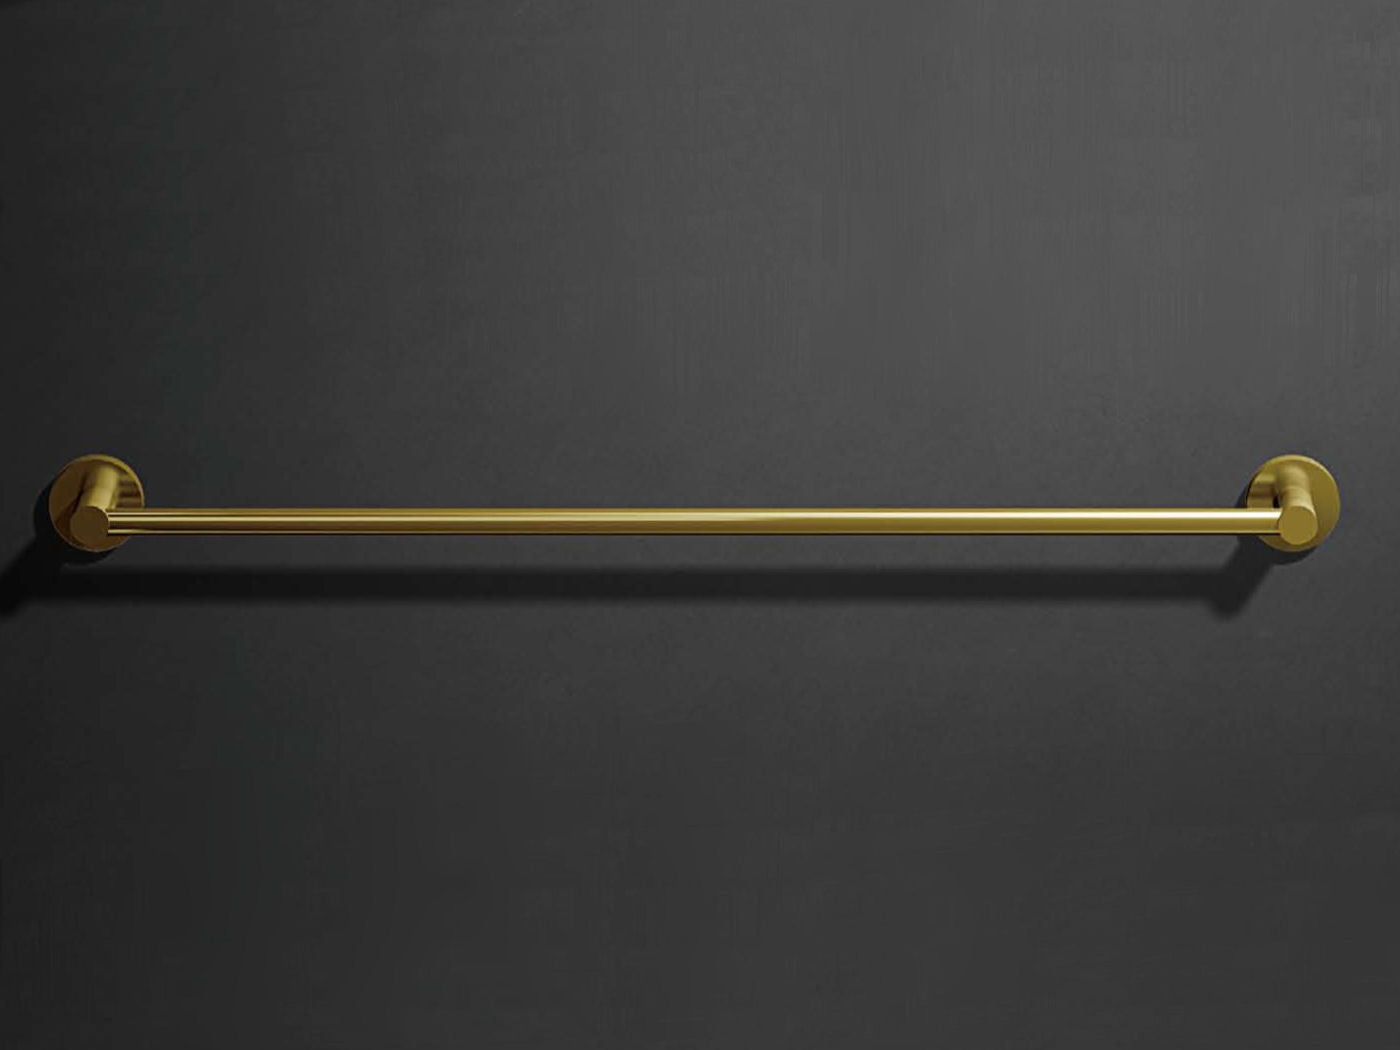 Luxury Simple Towel Holder Opera Satin Gold - |VESIMI Design| Luxury and Rustic bathrooms online